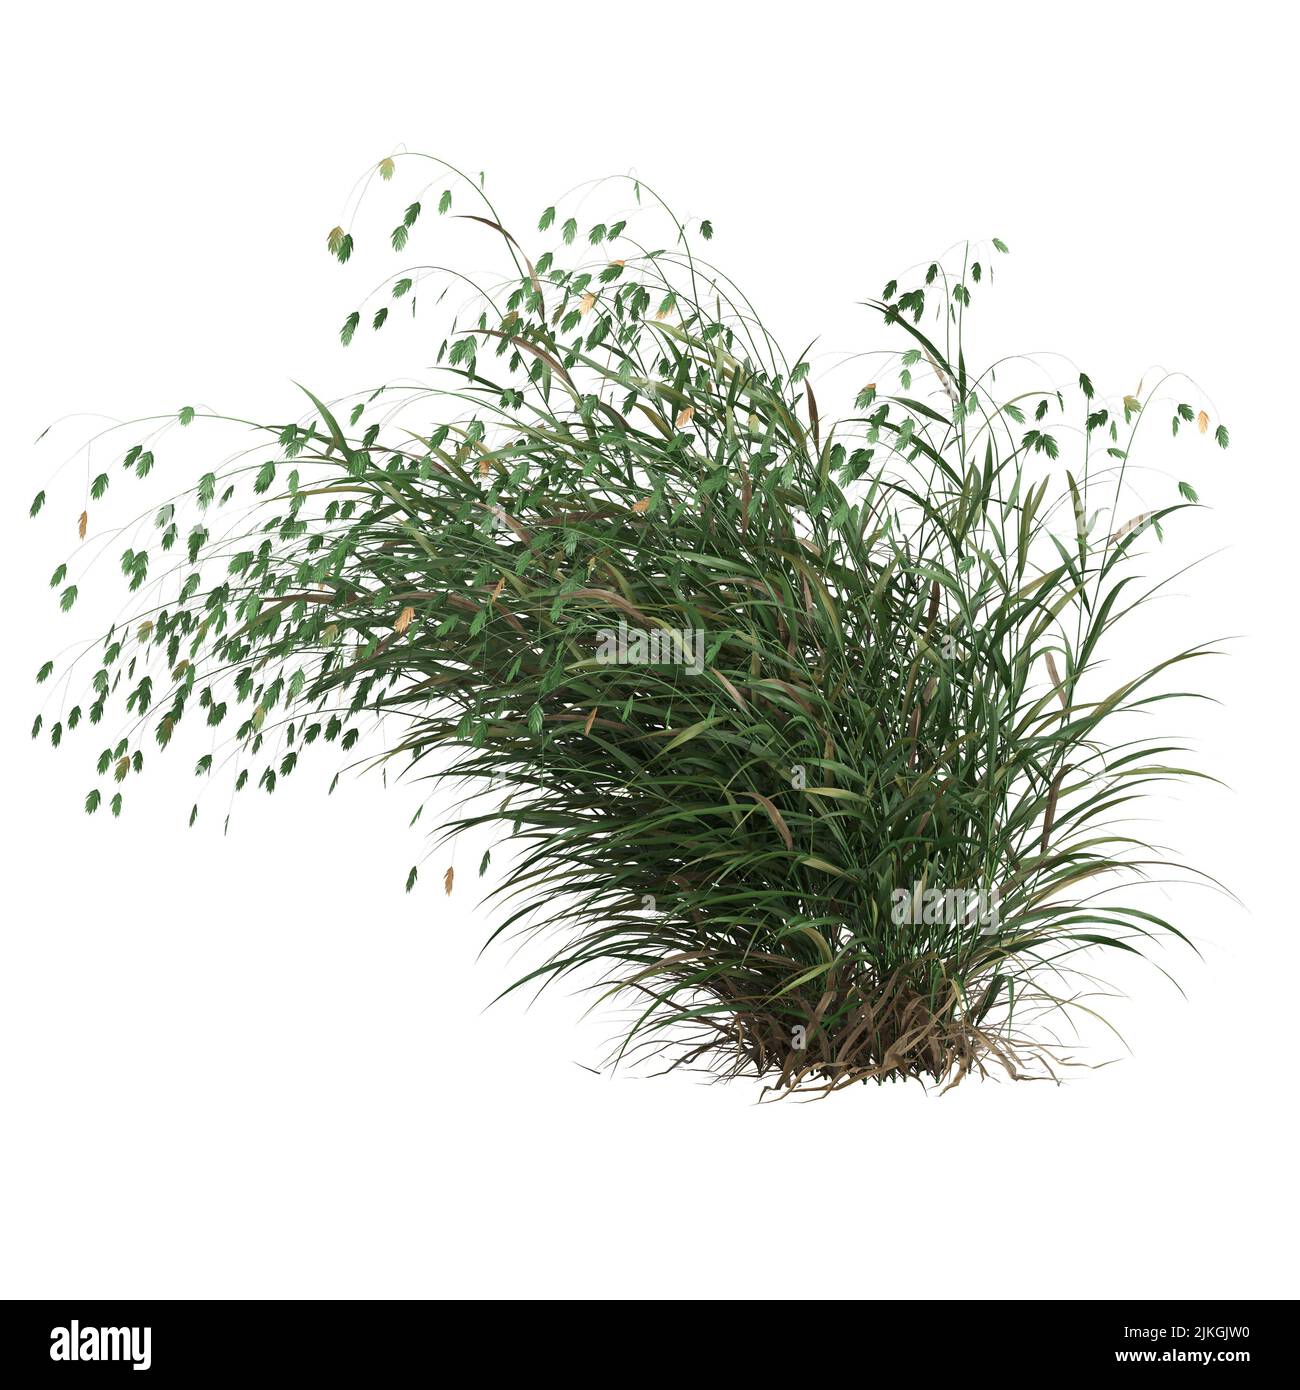 3d illustration of chasmanthium latifolium grass isolated on white background Stock Photo